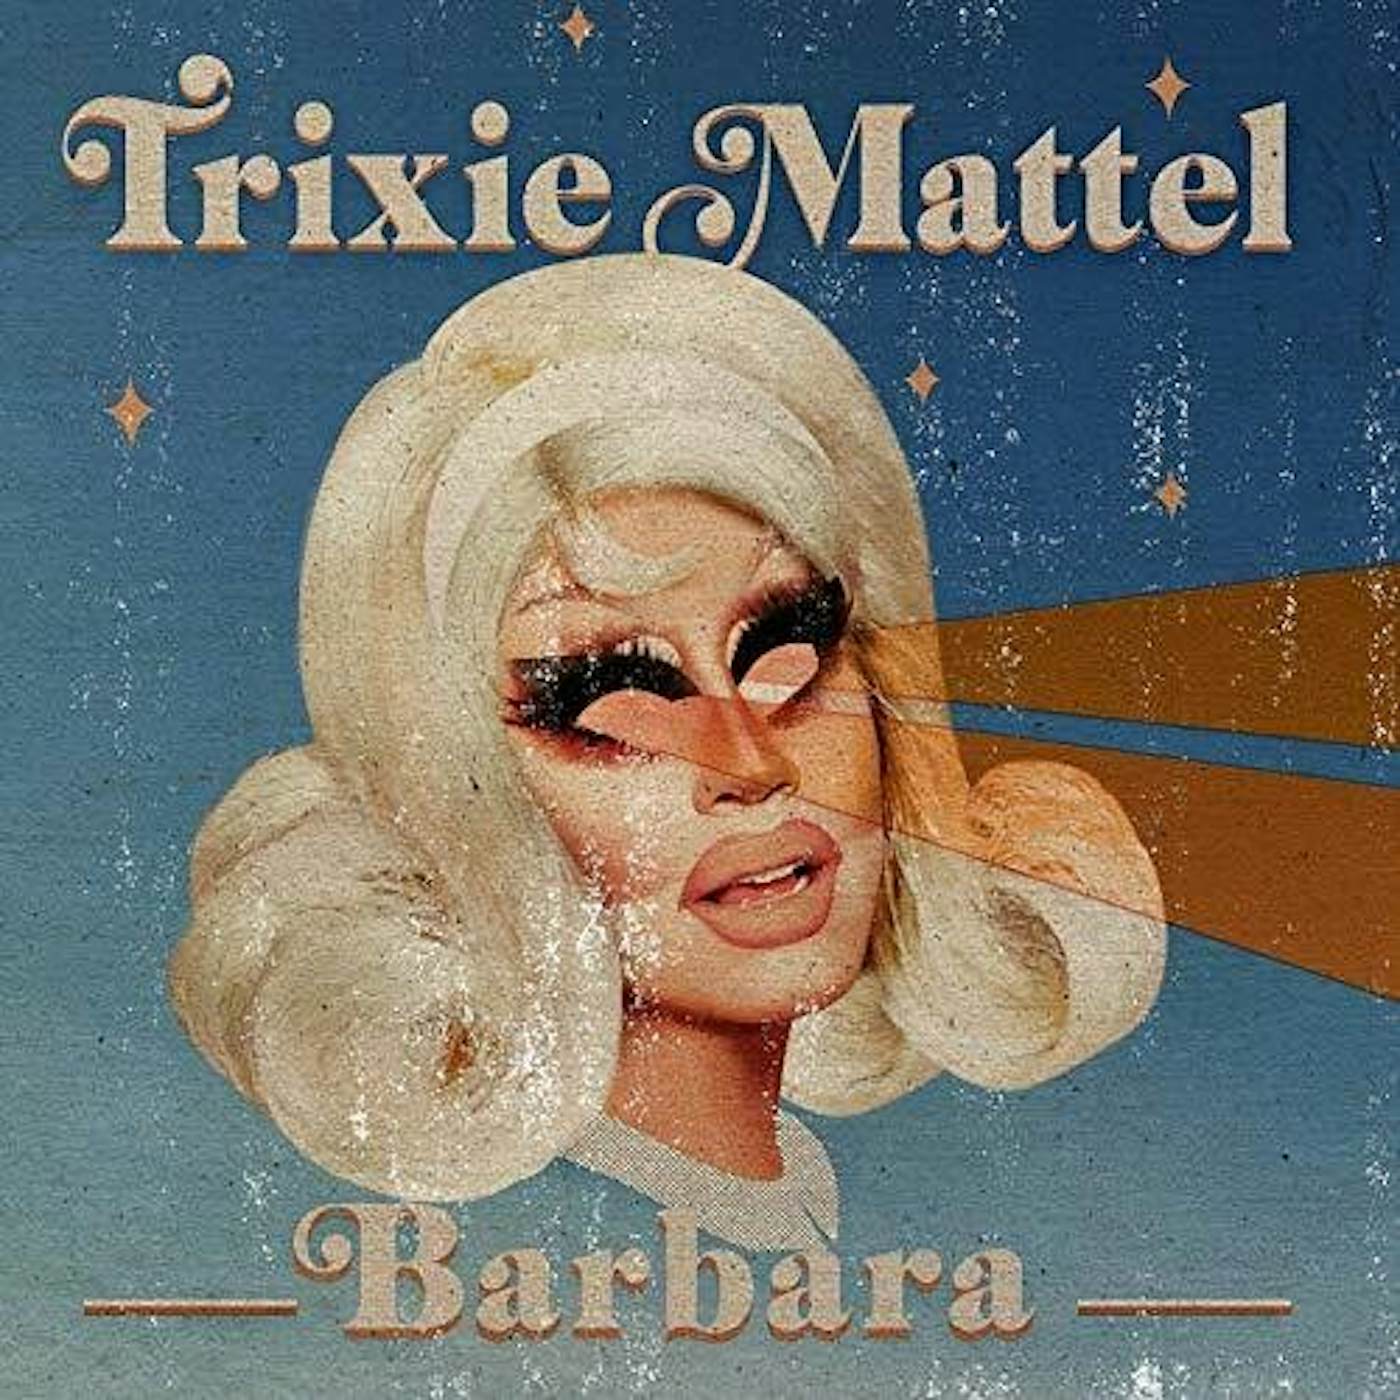 Trixie Mattel Barbara Vinyl Record